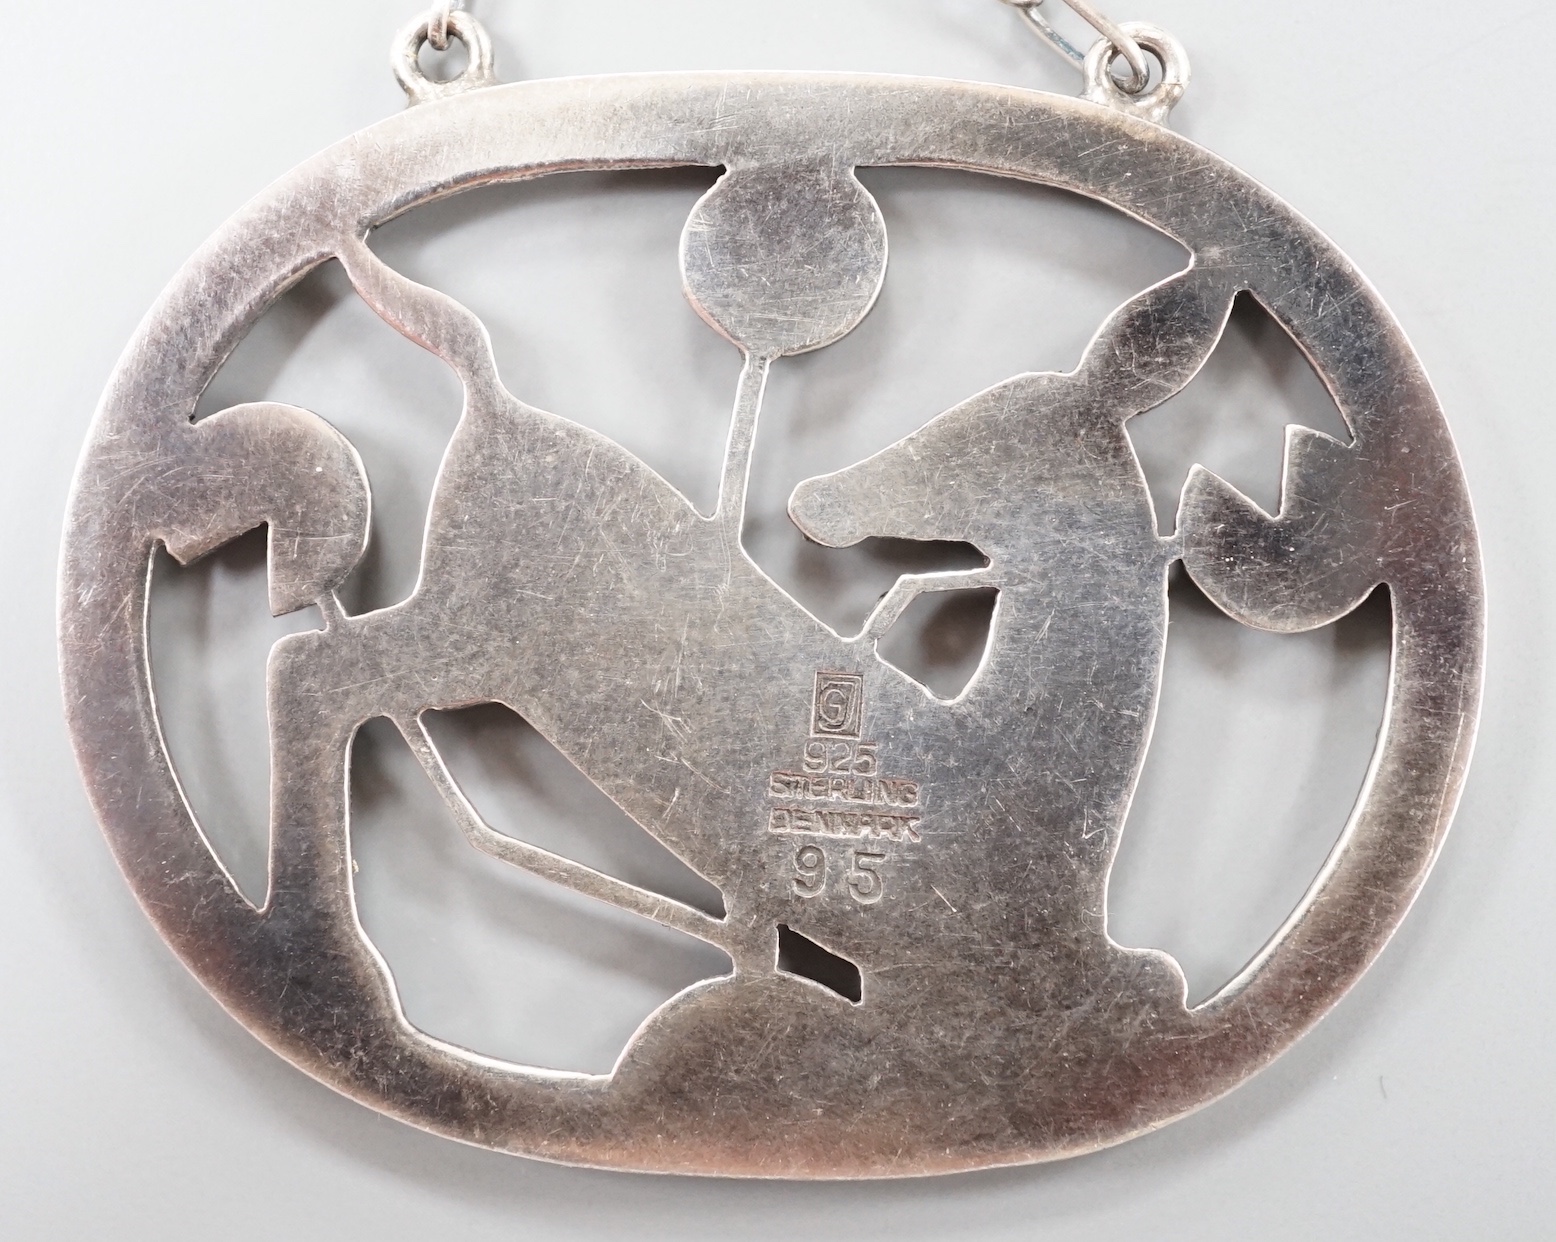 A Georg Jensen sterling 'kneeling deer' oval pendant necklace, no. 95, pendant 42mm, chain 53cm.